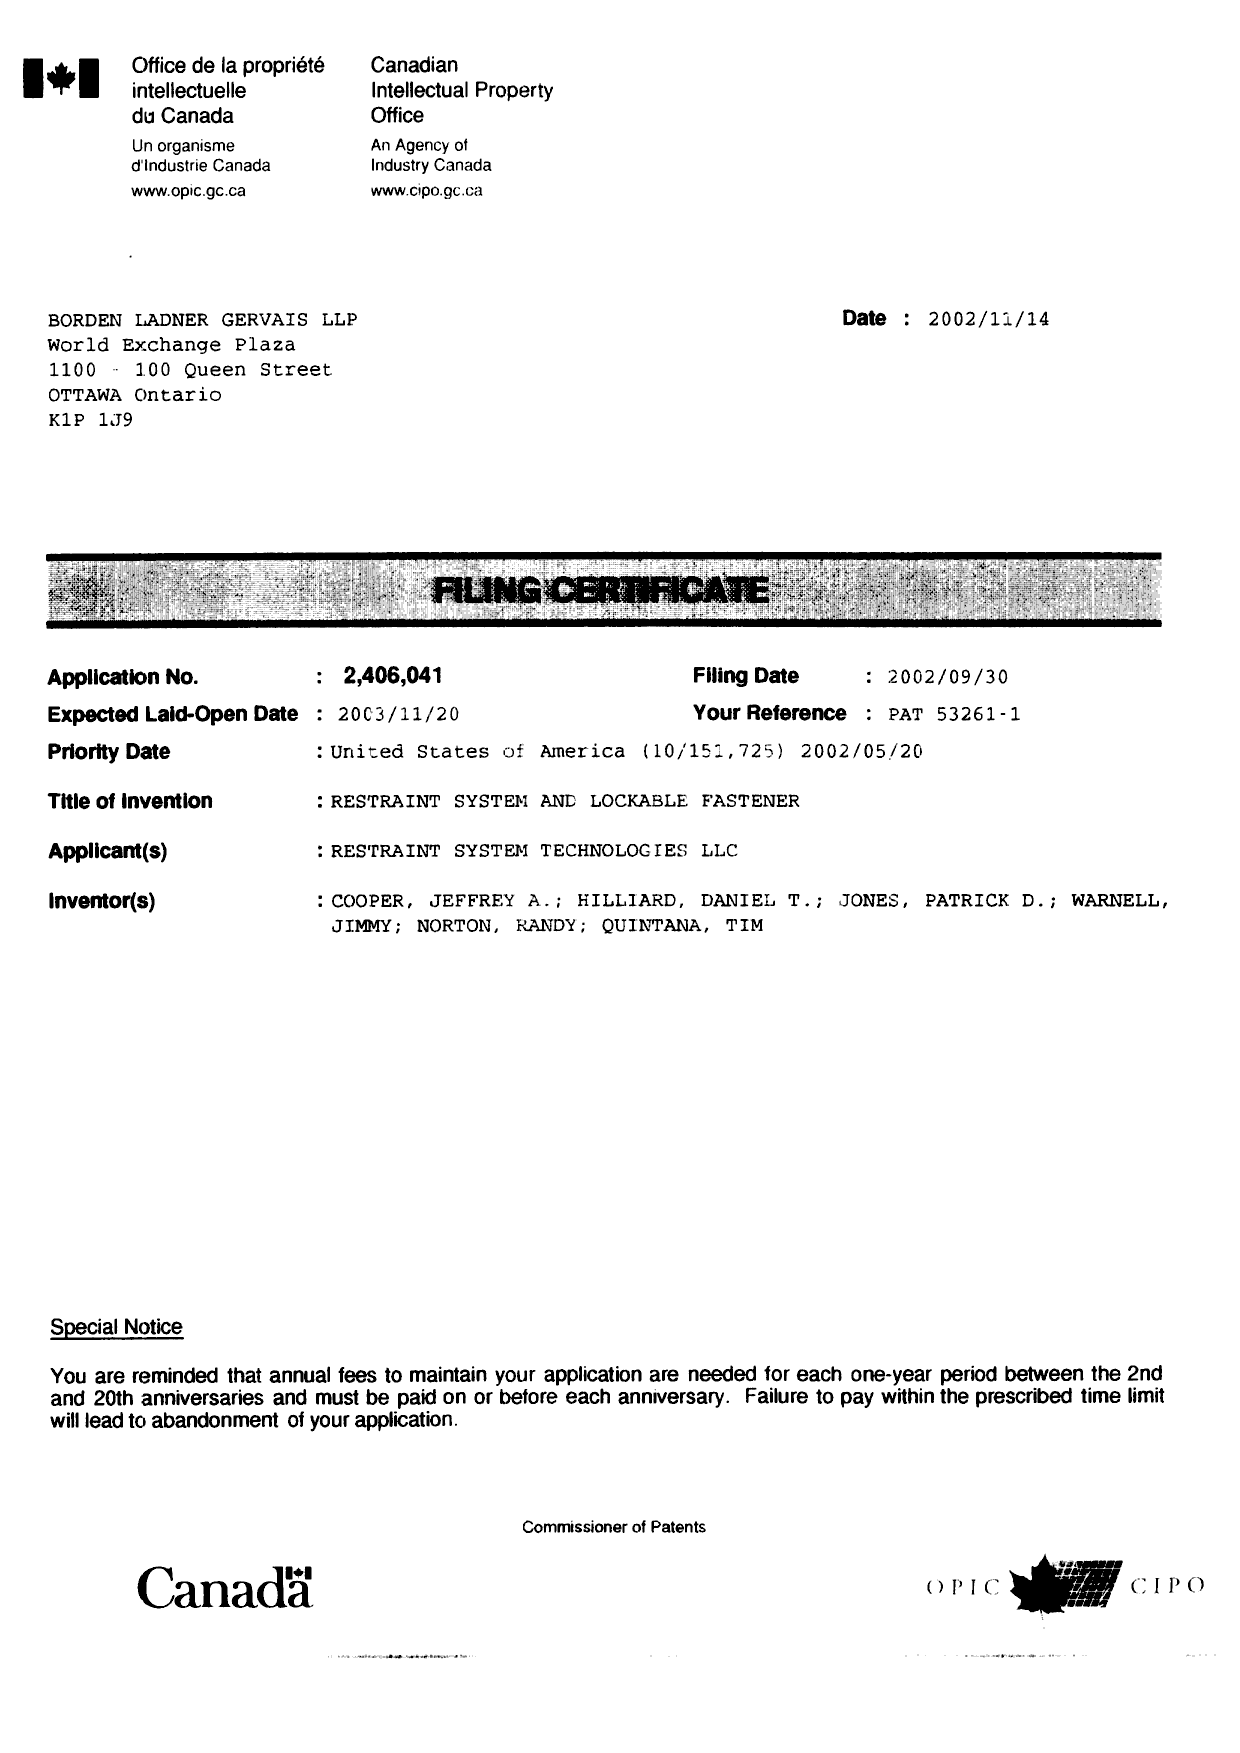 Canadian Patent Document 2406041. Correspondence 20030210. Image 2 of 2